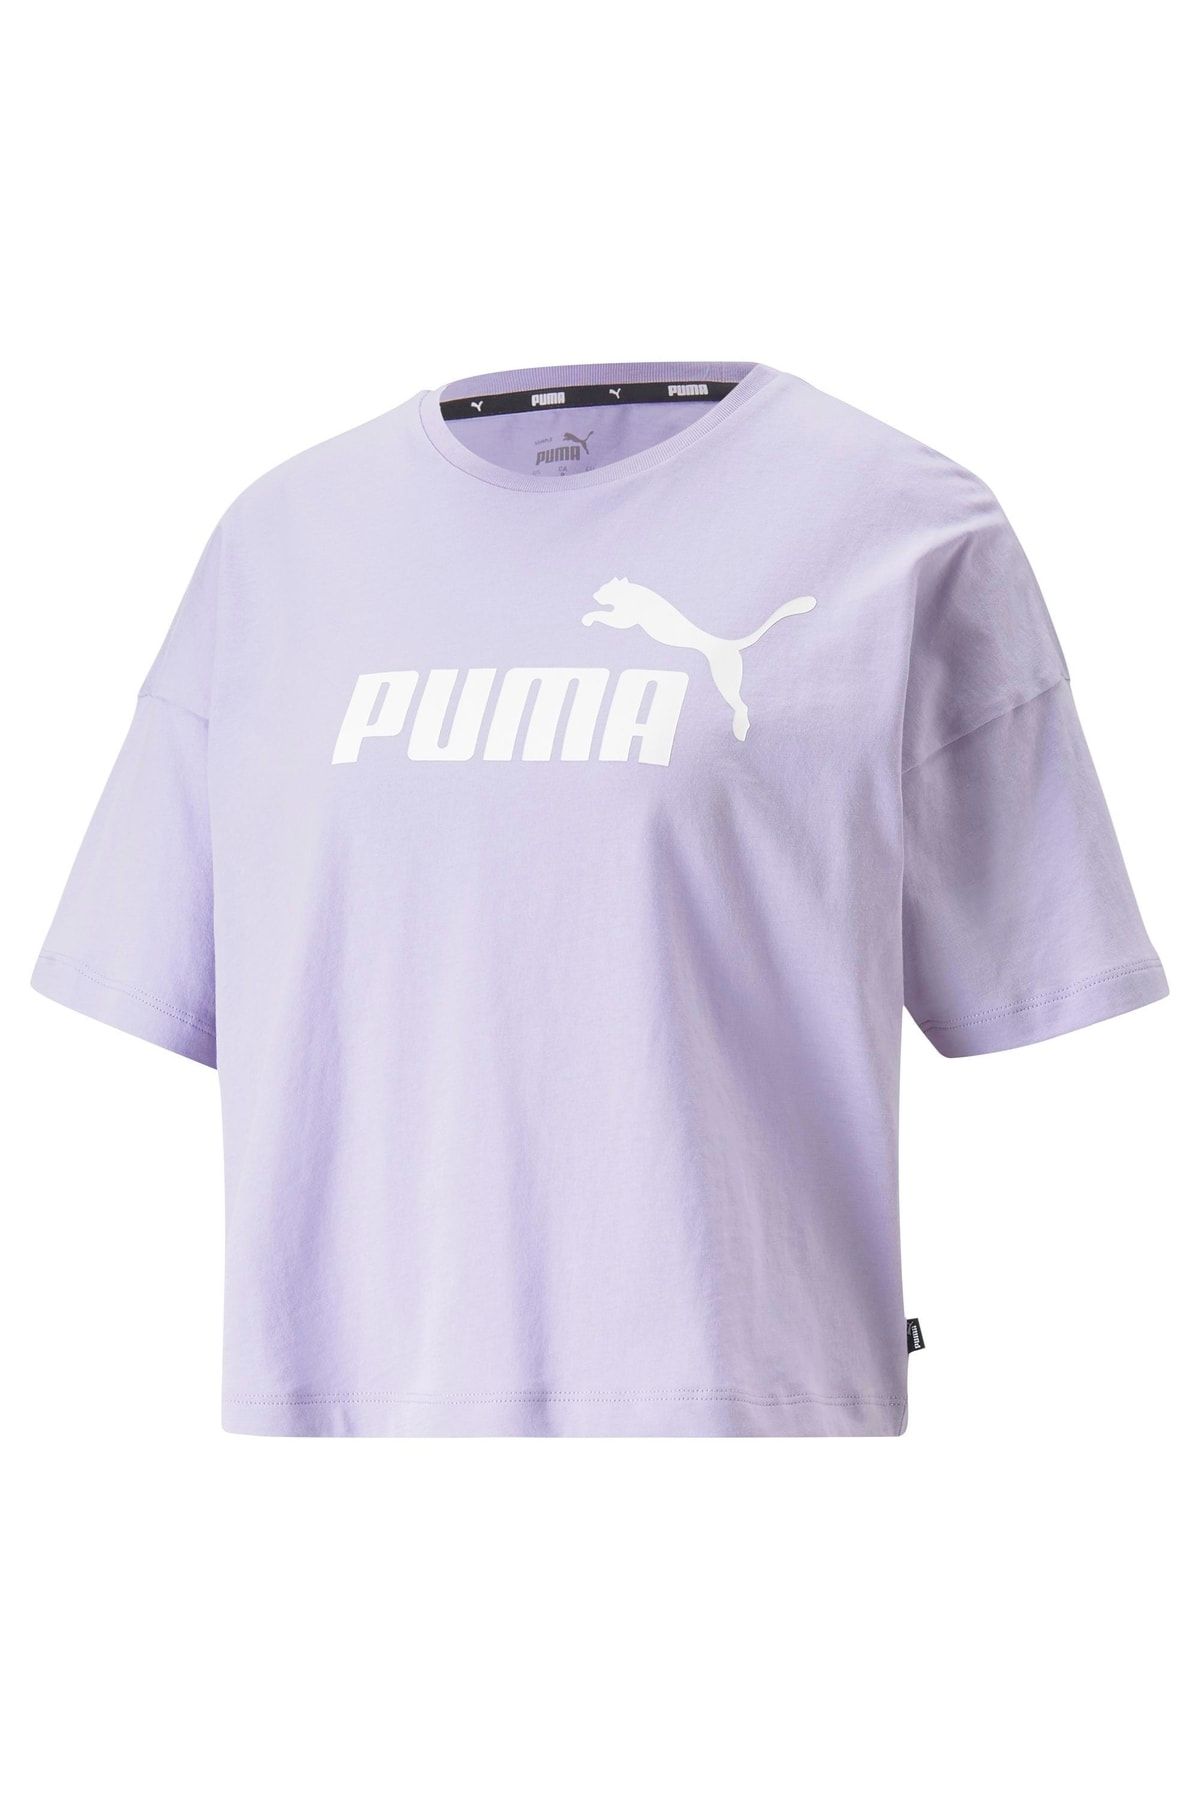 Puma Ess Cropped Logo Tee T-shirt Sleeve Lilac Trendyol Short - Women\'s